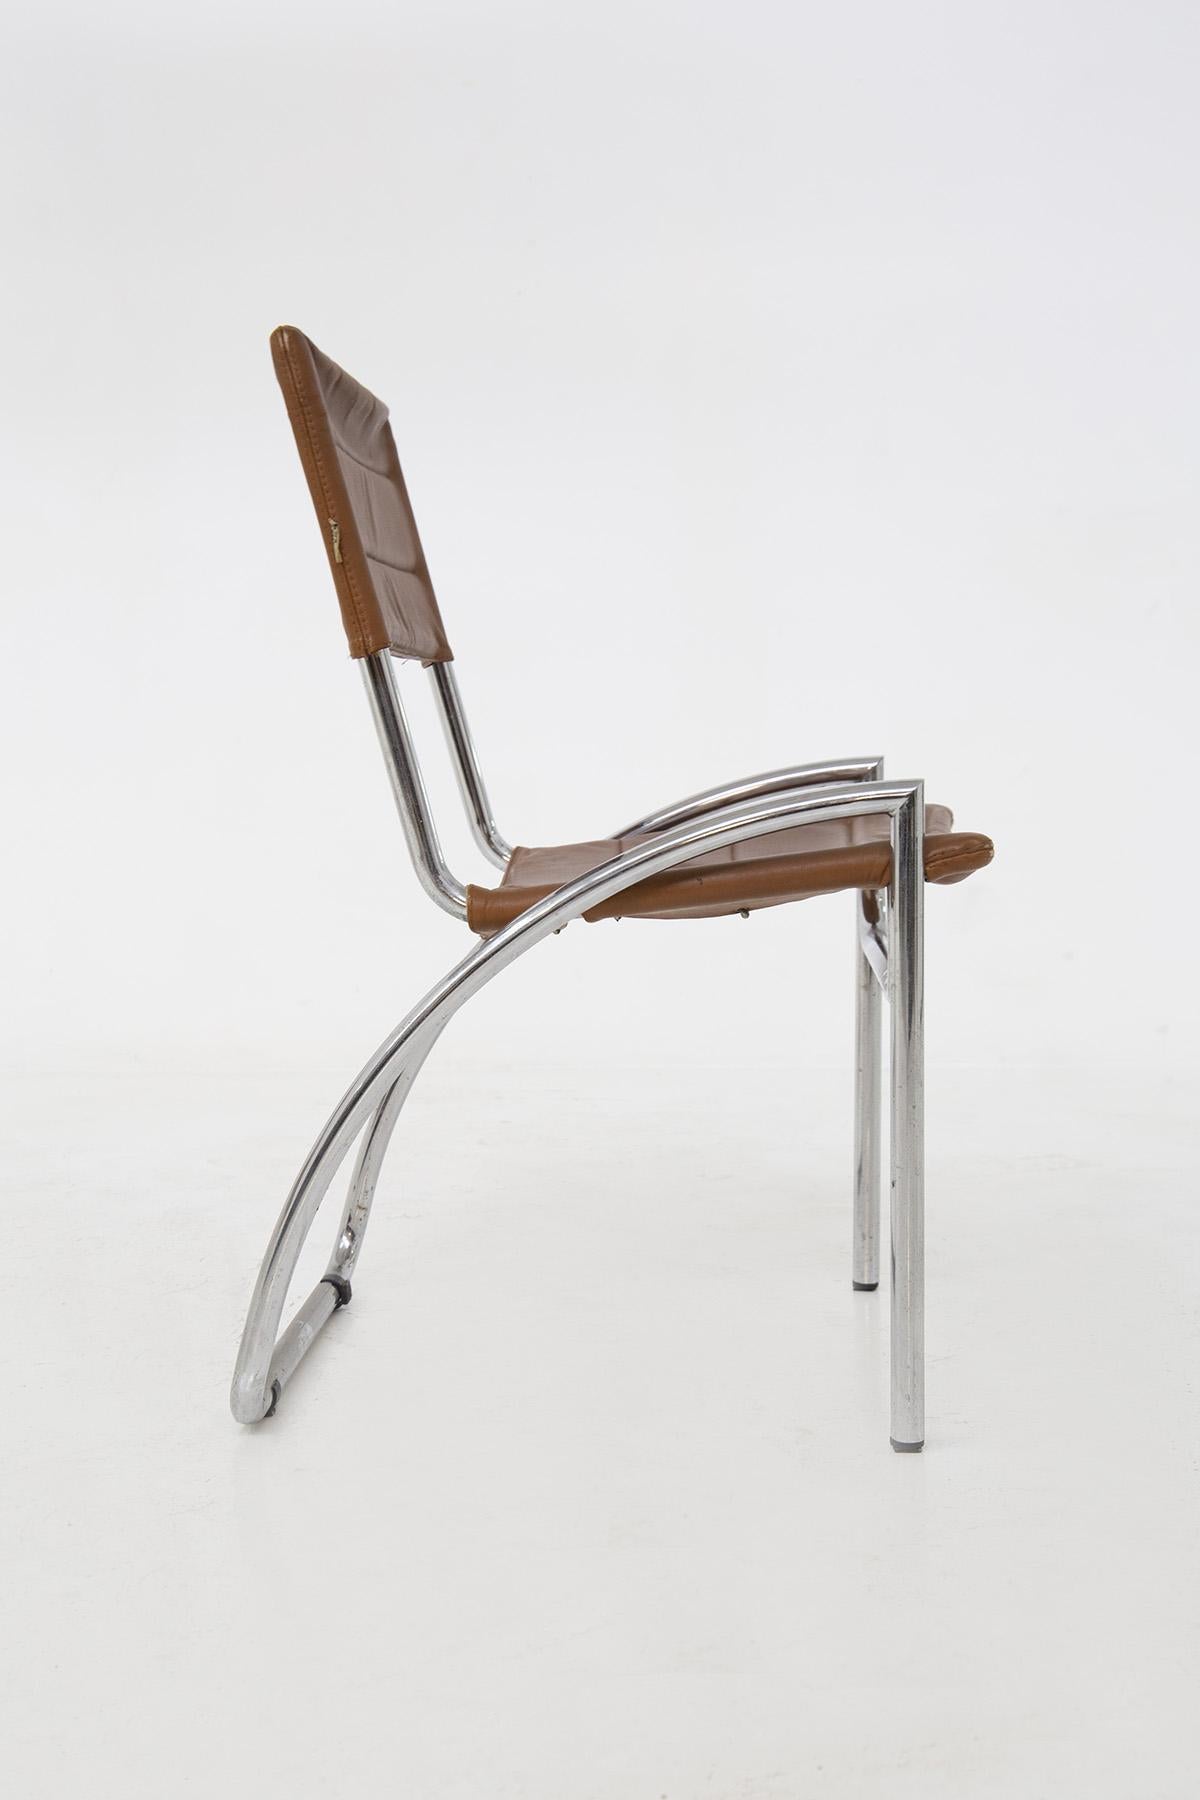 Gae Aulenti Chairs by Elam Model Lira Set of Four, Published 1